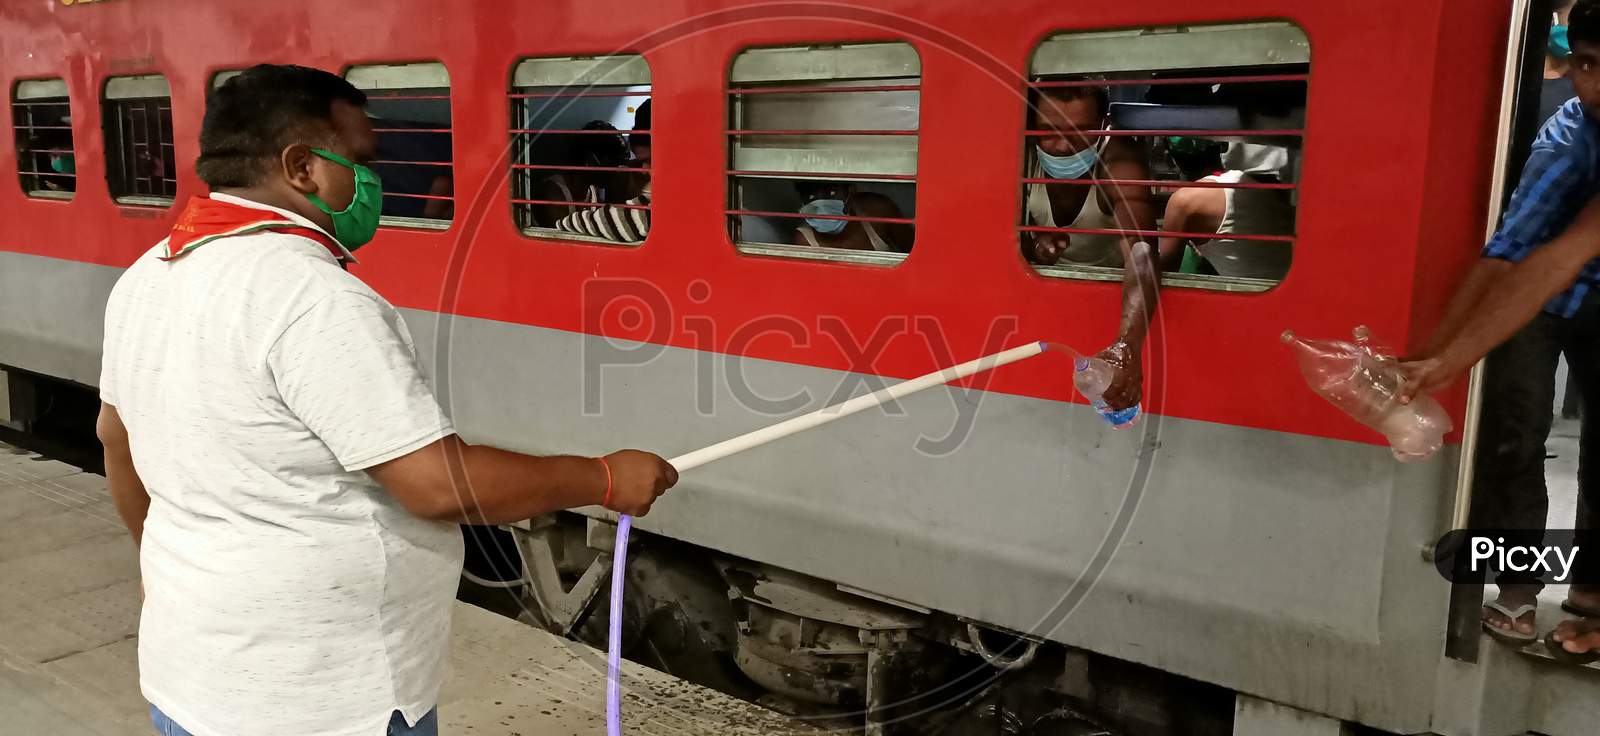 Corona warriors watering people on a train during the Corona epidemic